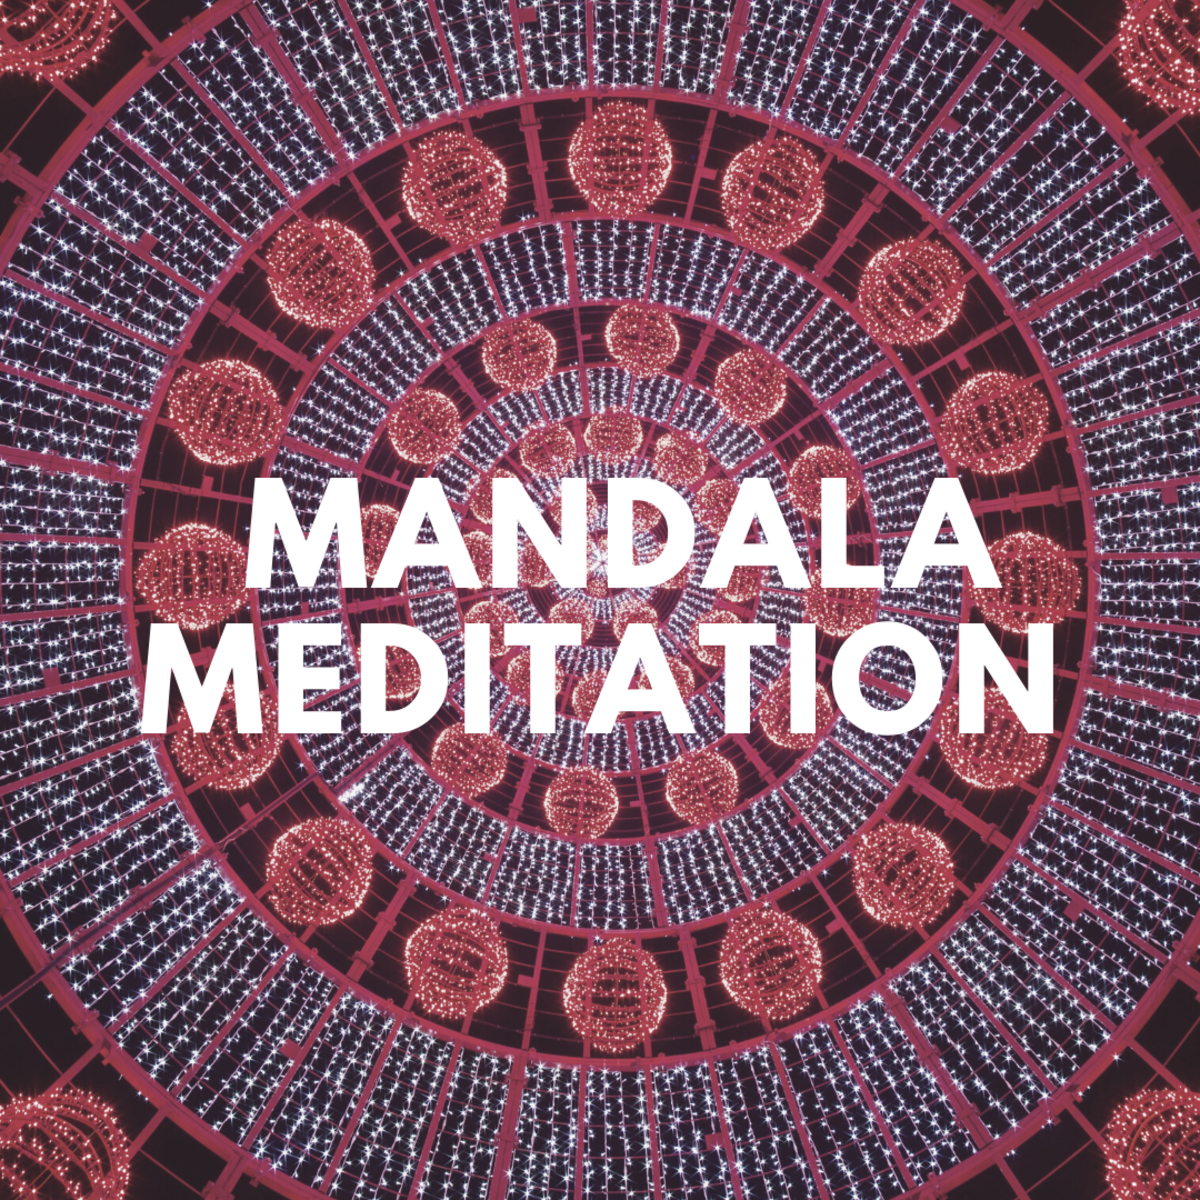 Healing mandala meditation